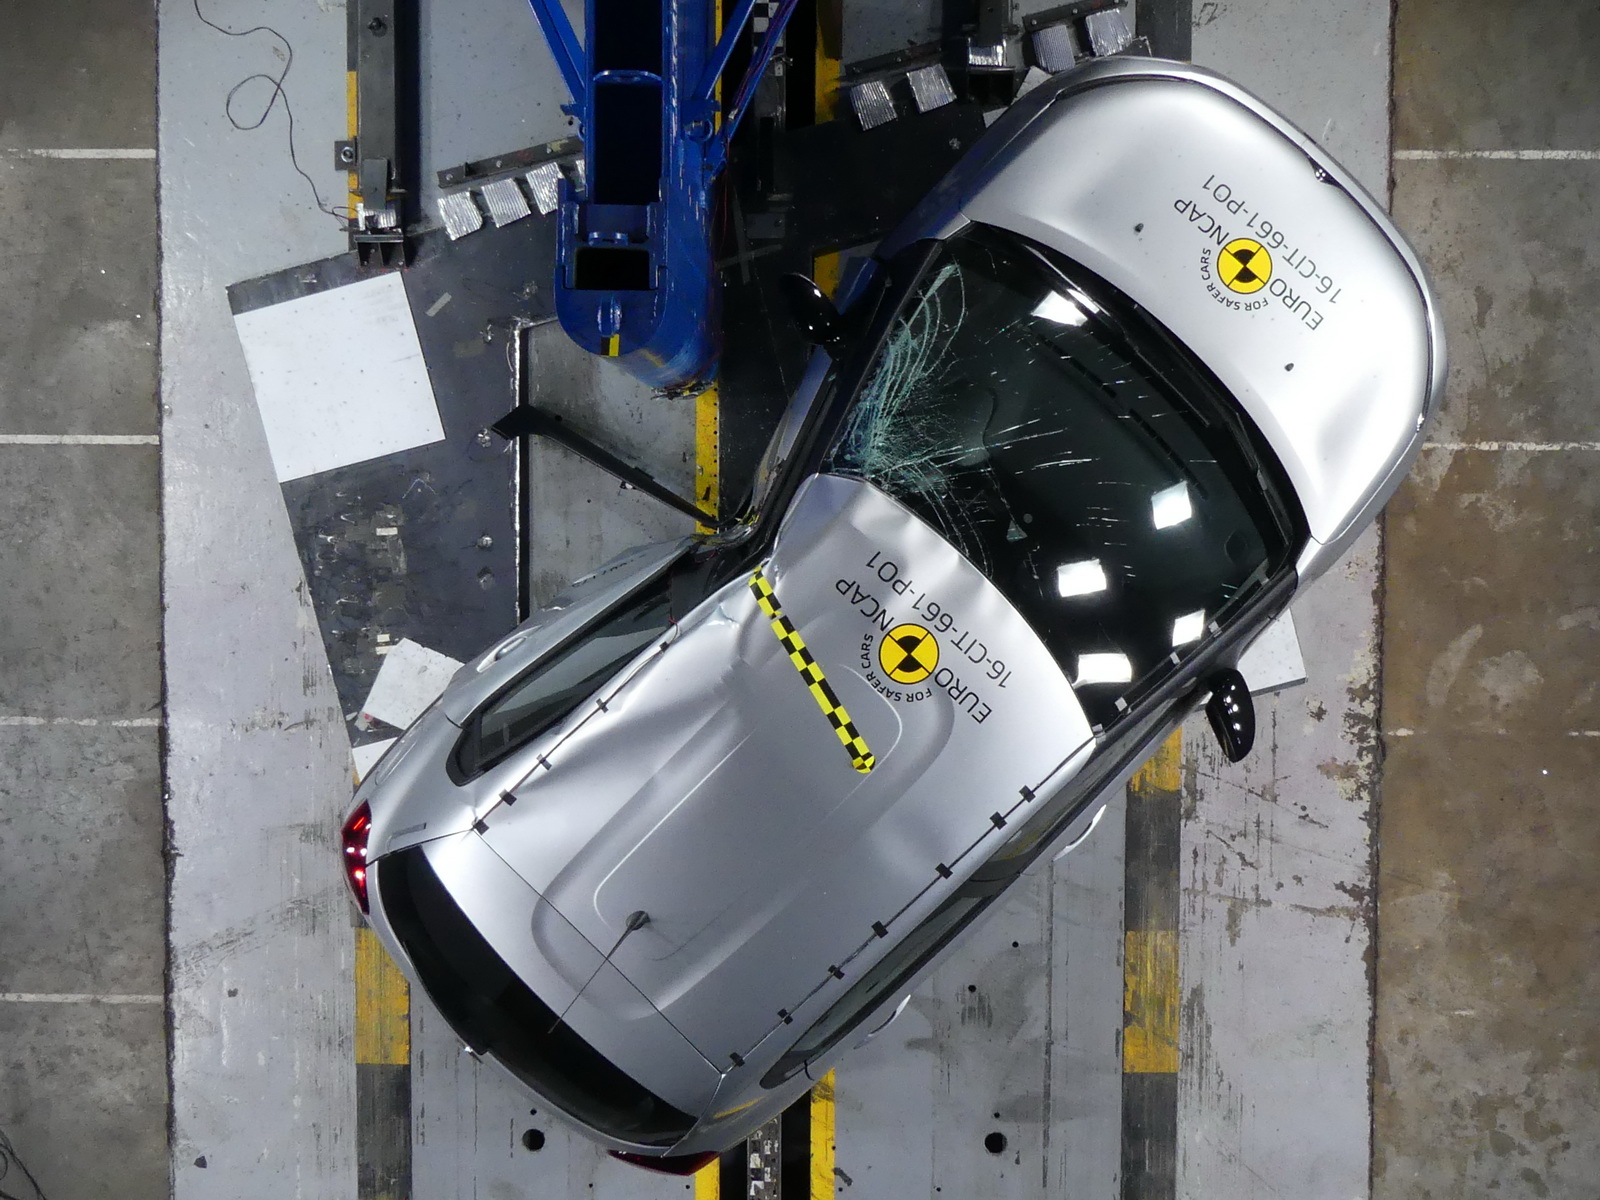 نتائج موسم اختبارات يورو NCAP لسلامة السيارات يكشف عنها 20